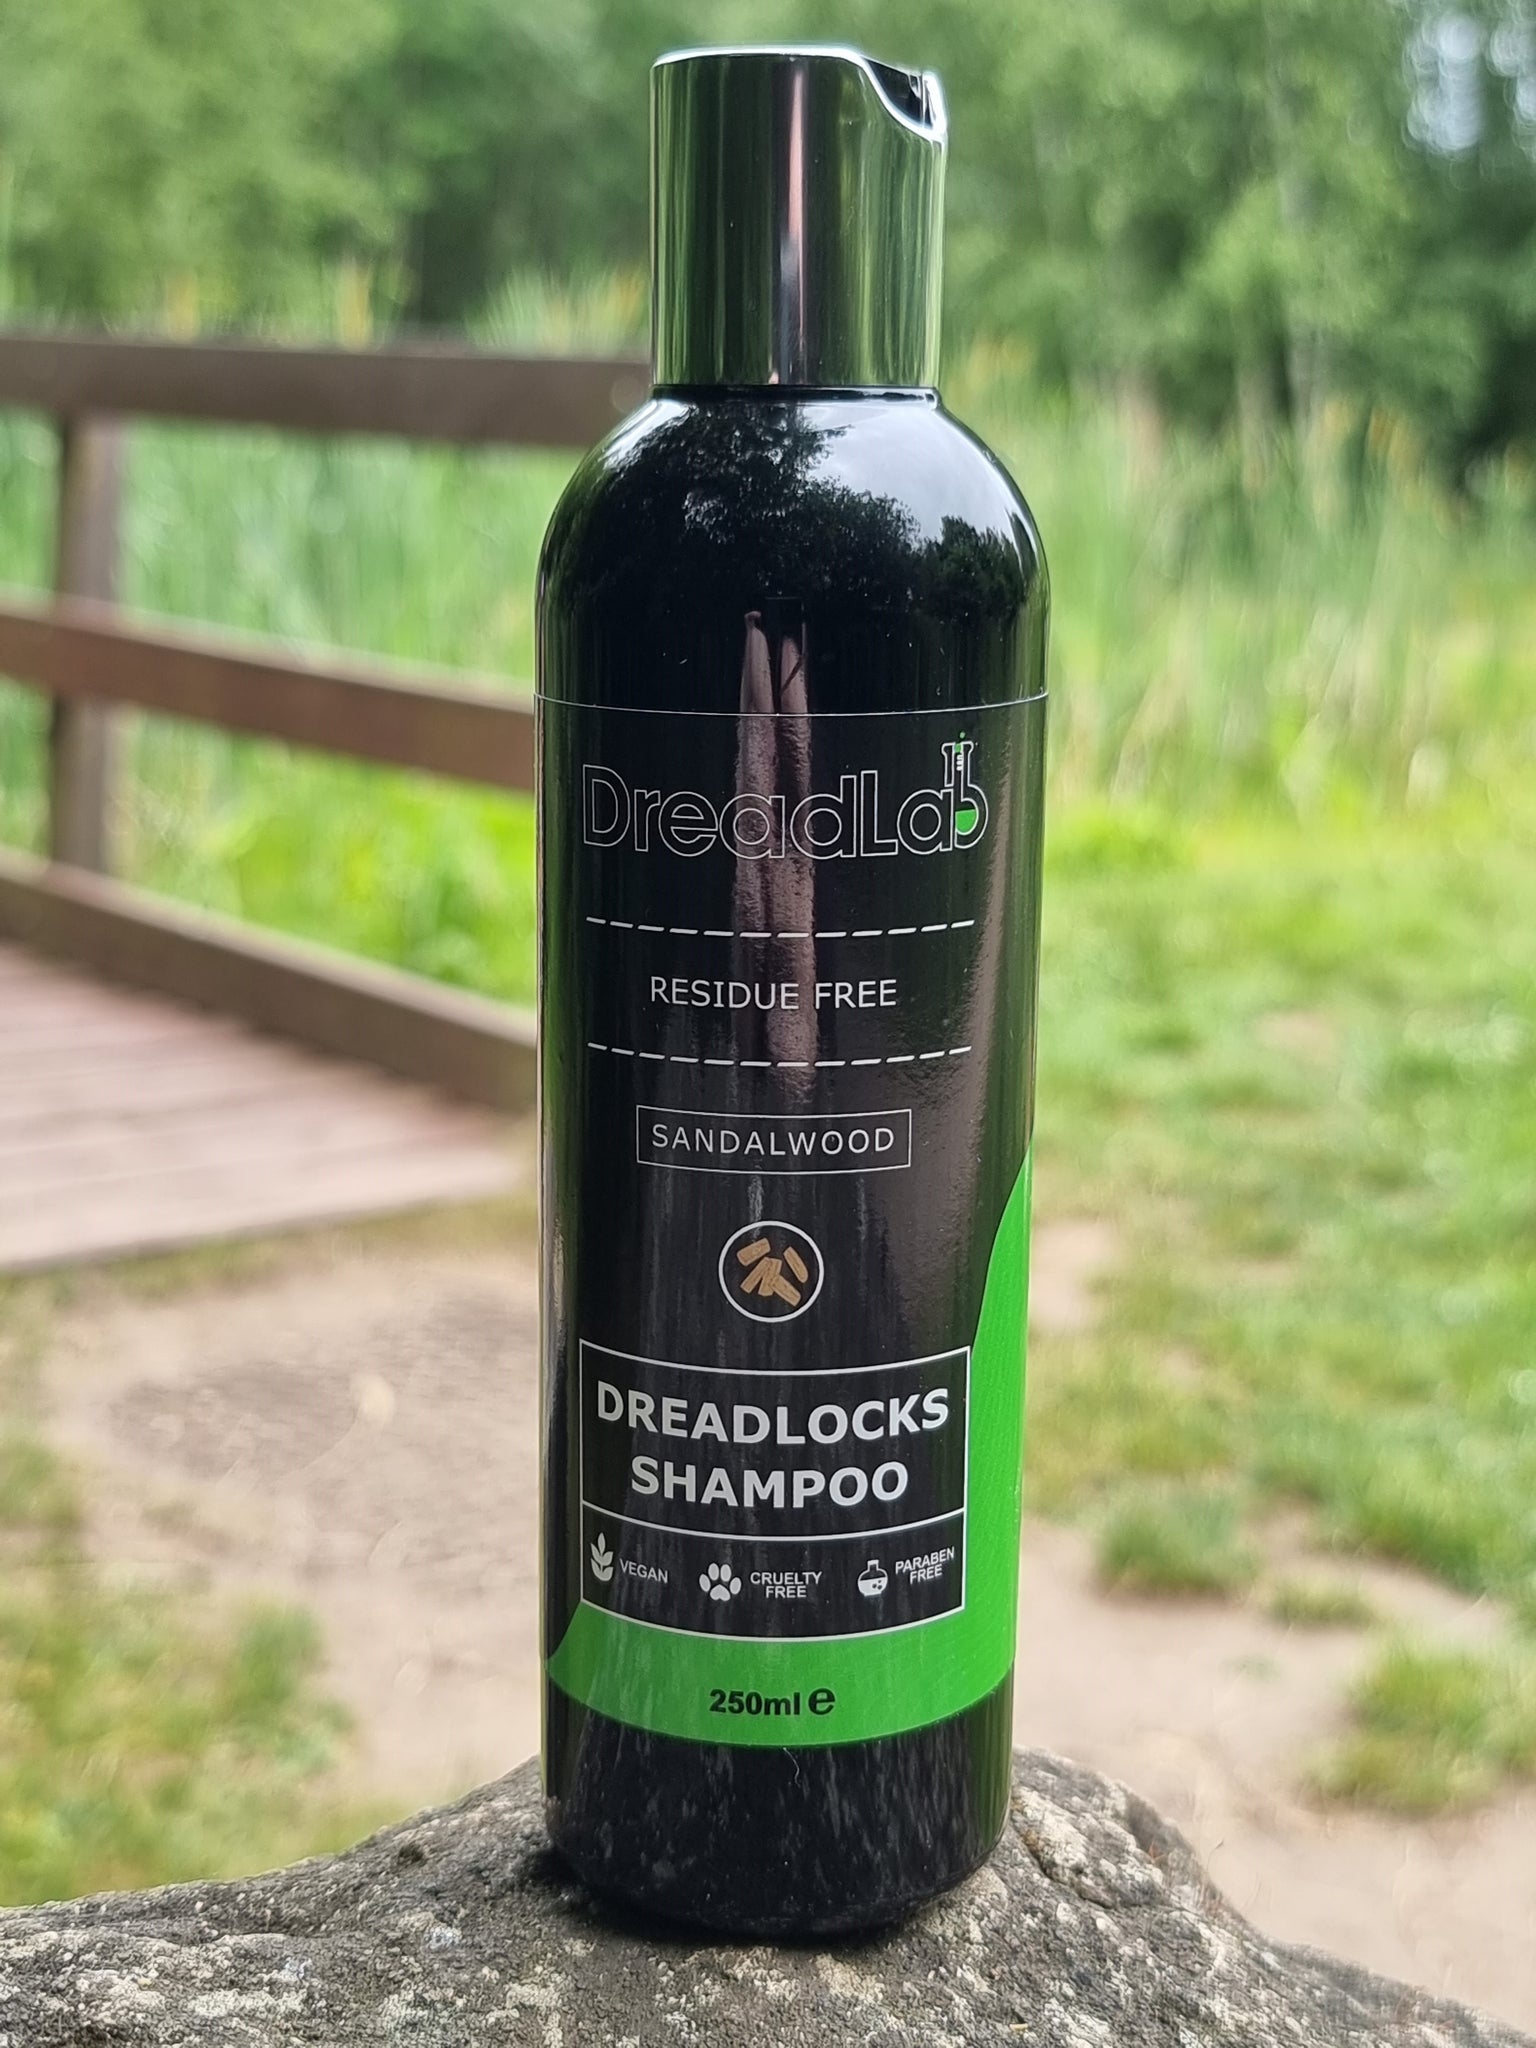 DreadLab - Flüssiges Dreadlocks Shampoo (250ml) rückstandsfrei